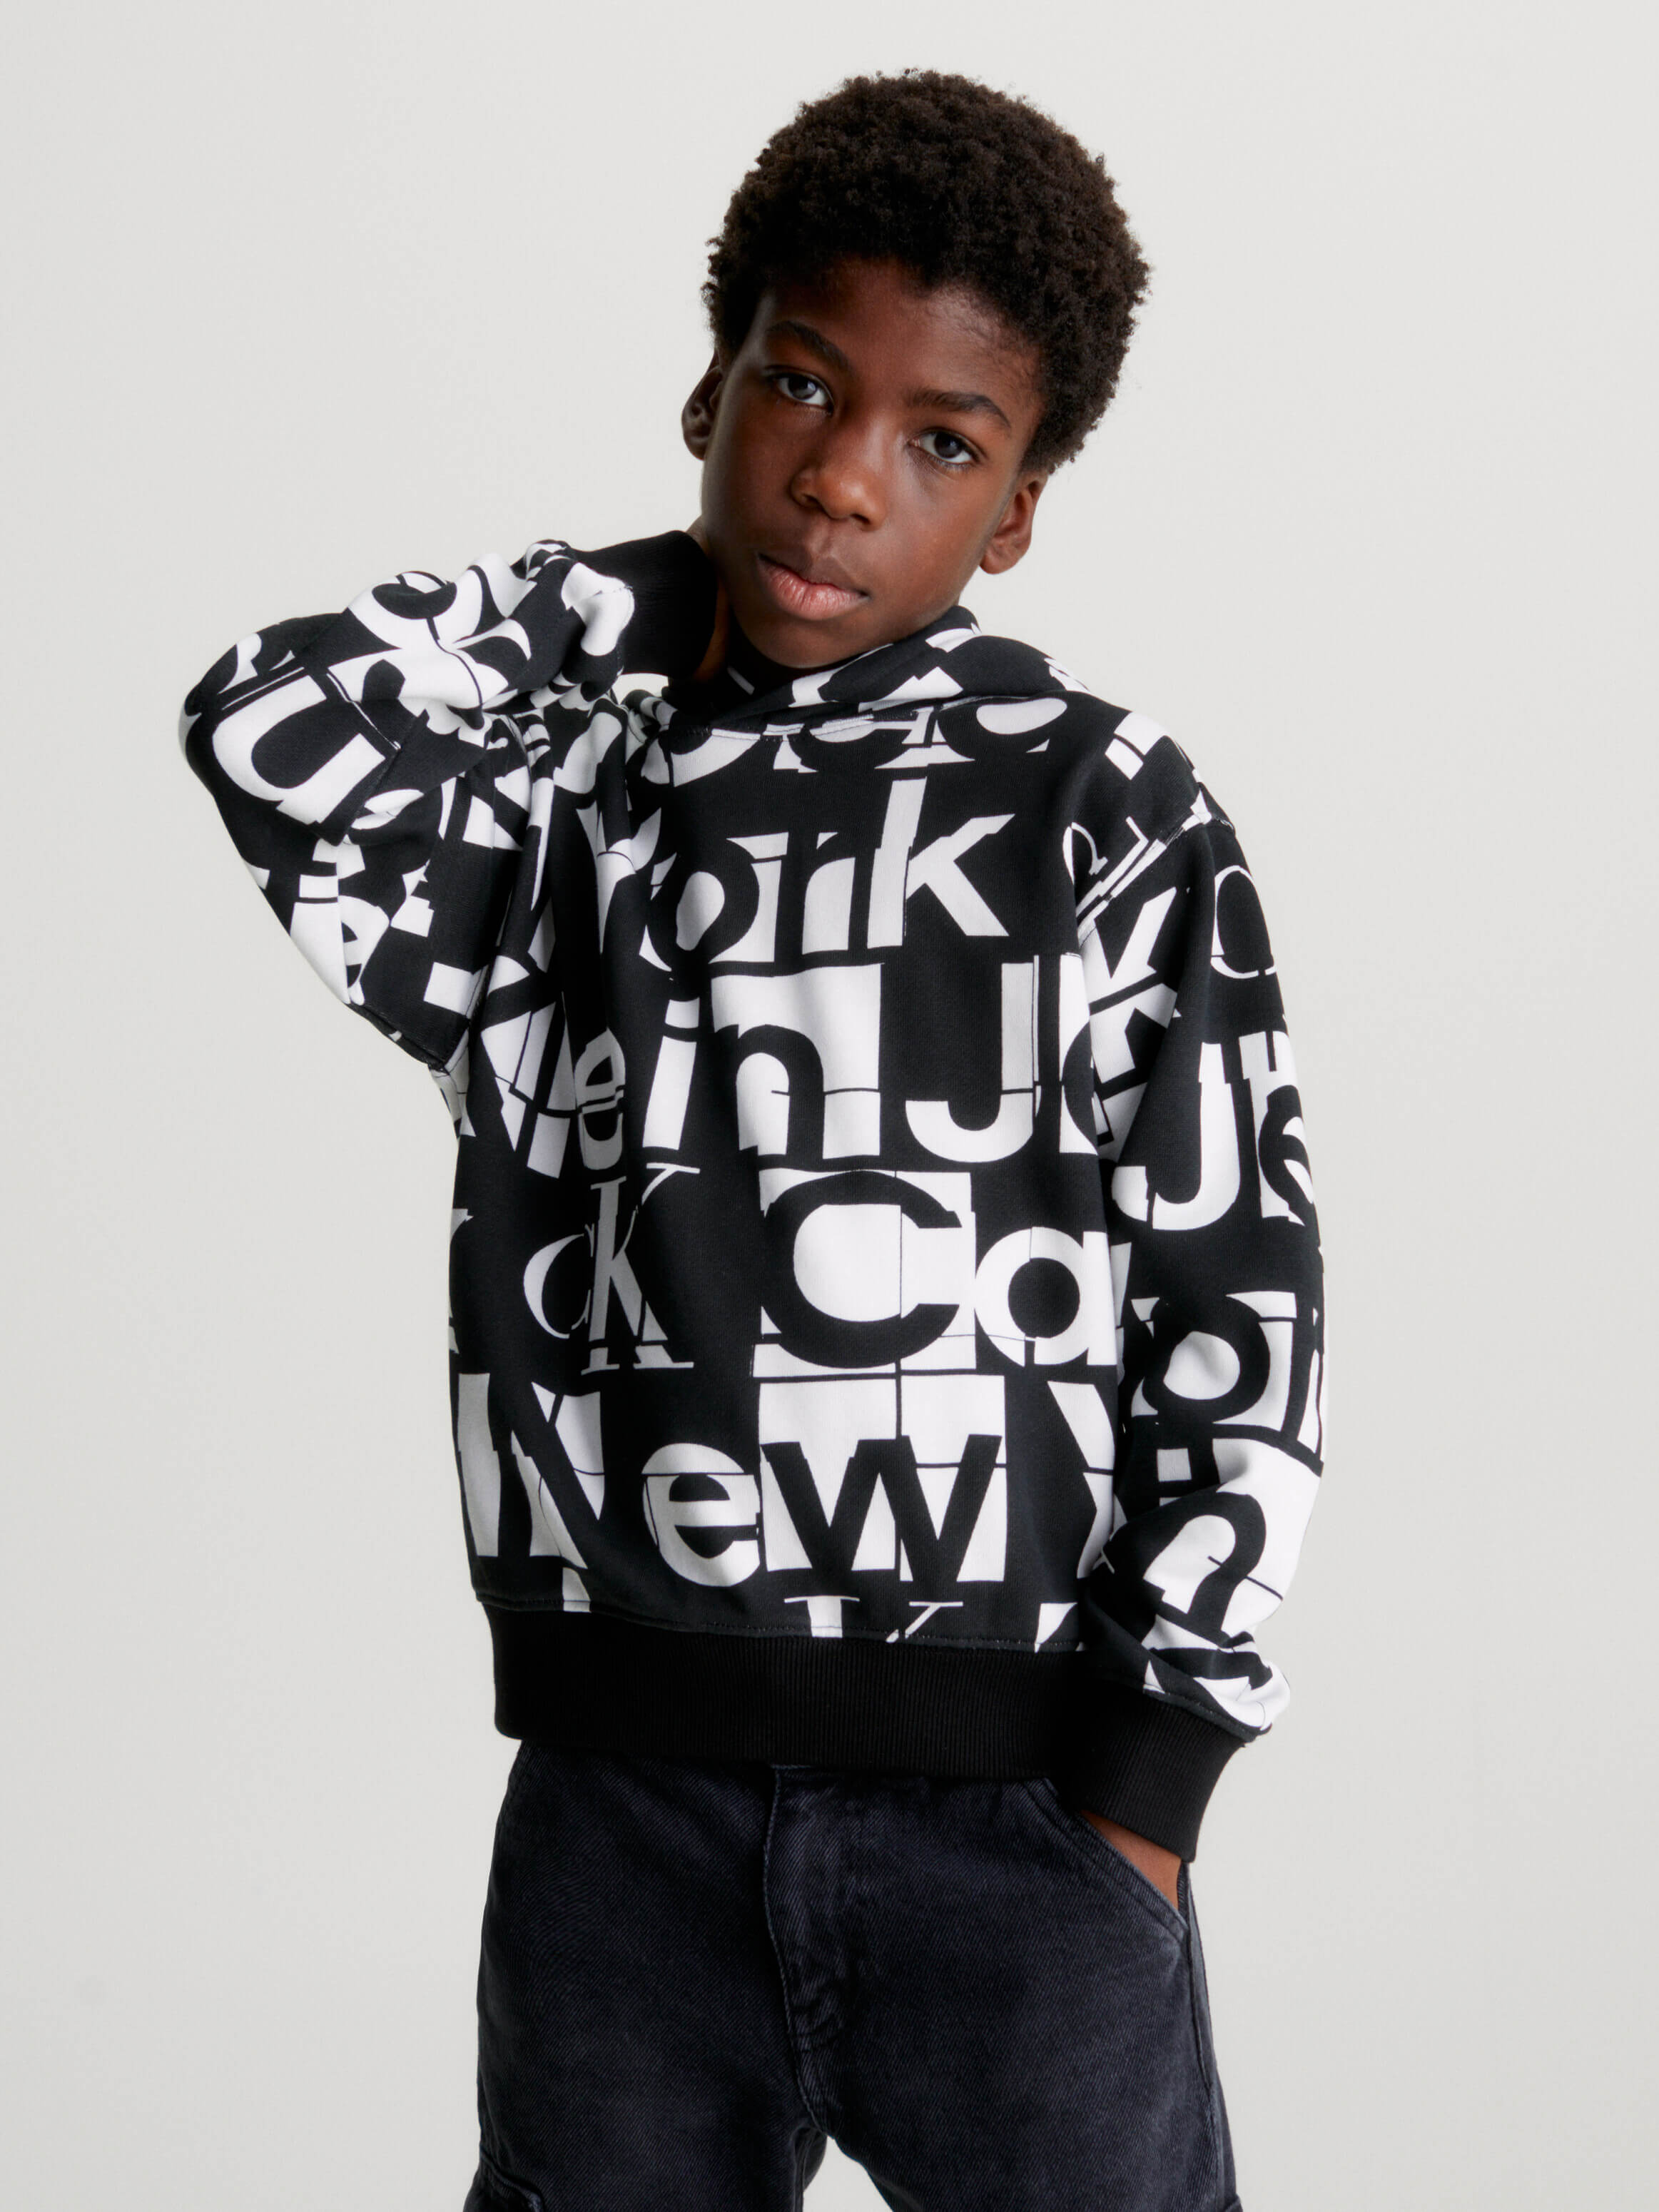 Sudadera Calvin Klein Estampado Niño Negro